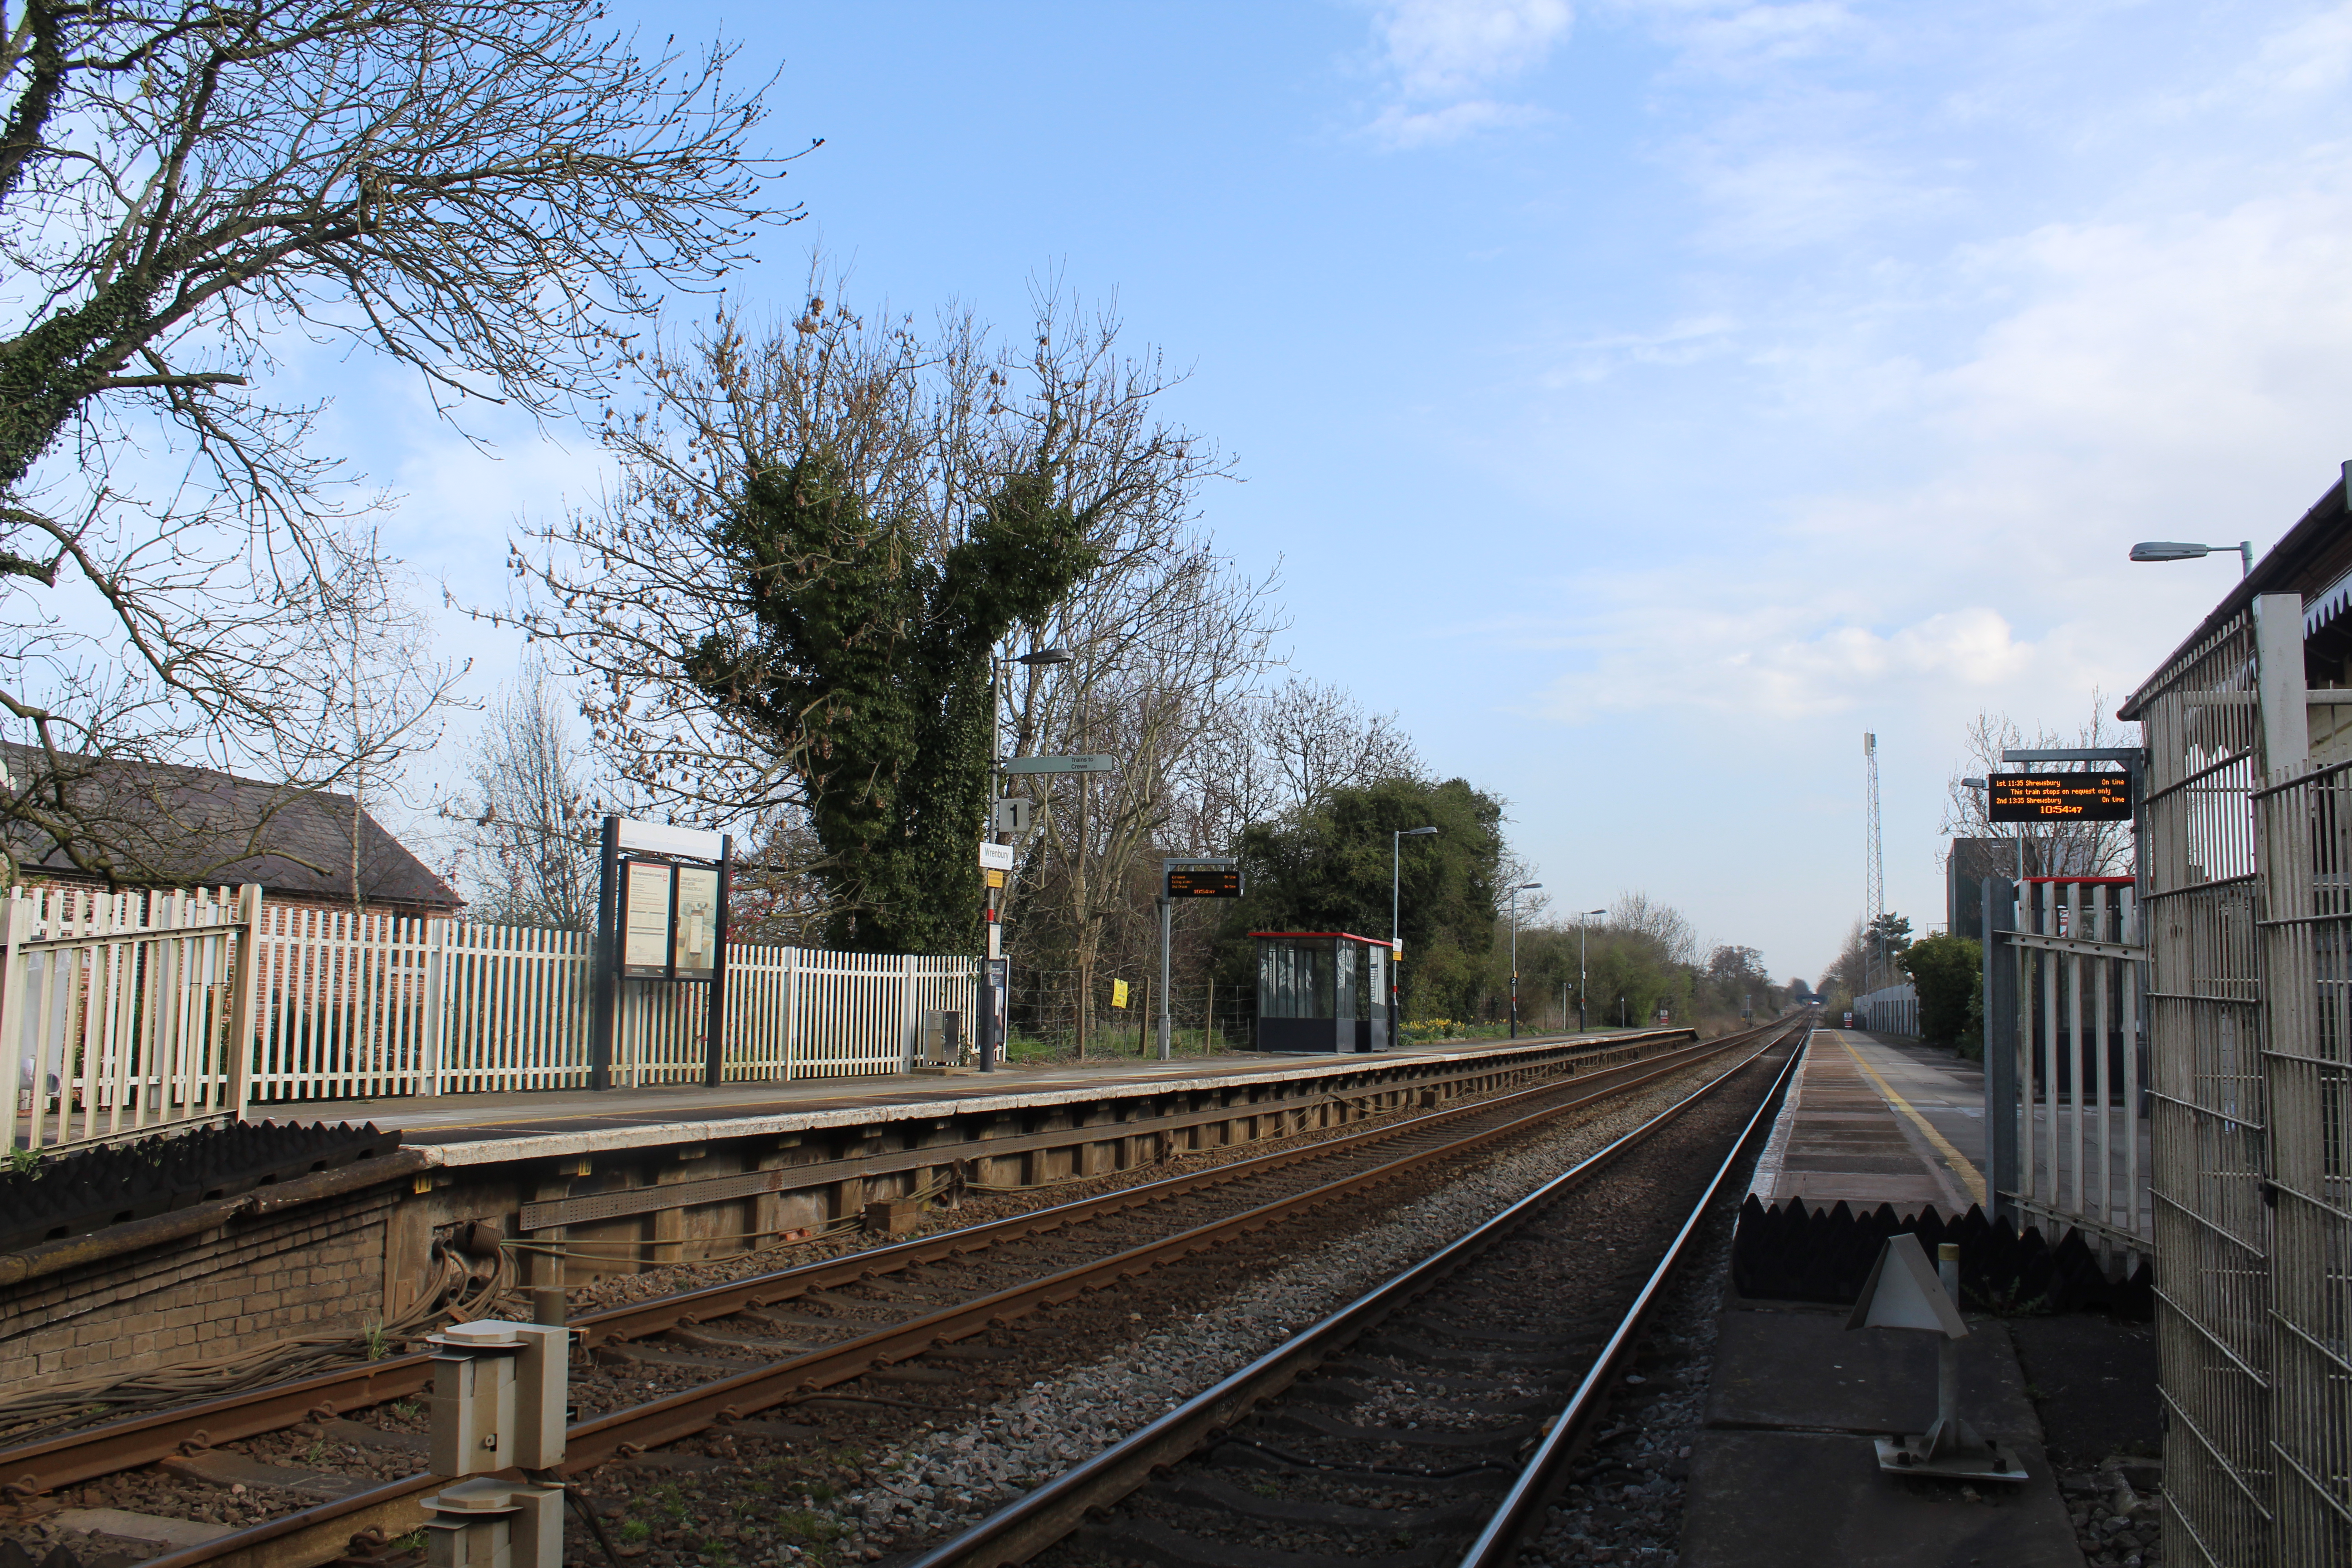 Wrenbury railway station